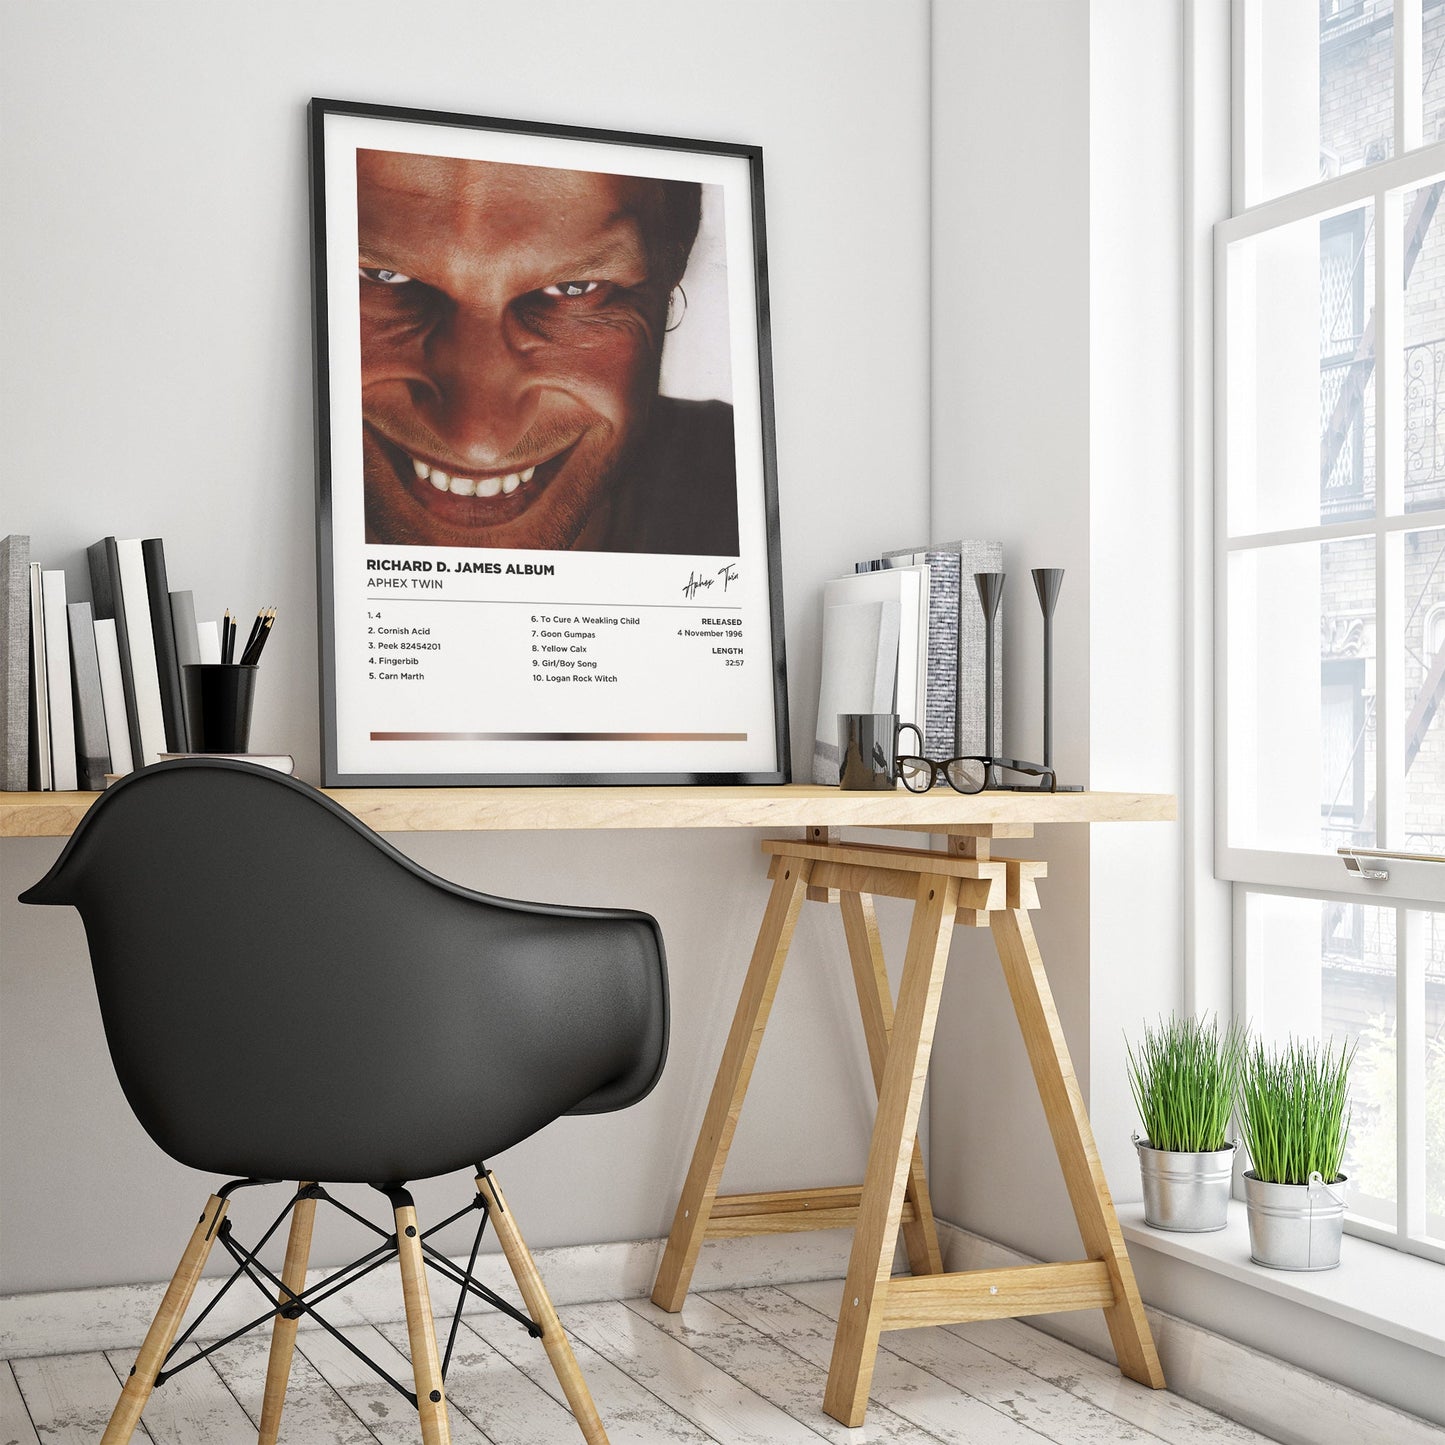 Aphex Twin - Richard D. James Album Poster Print - Framed Options Available | Polaroid Style | Album Cover Artwork